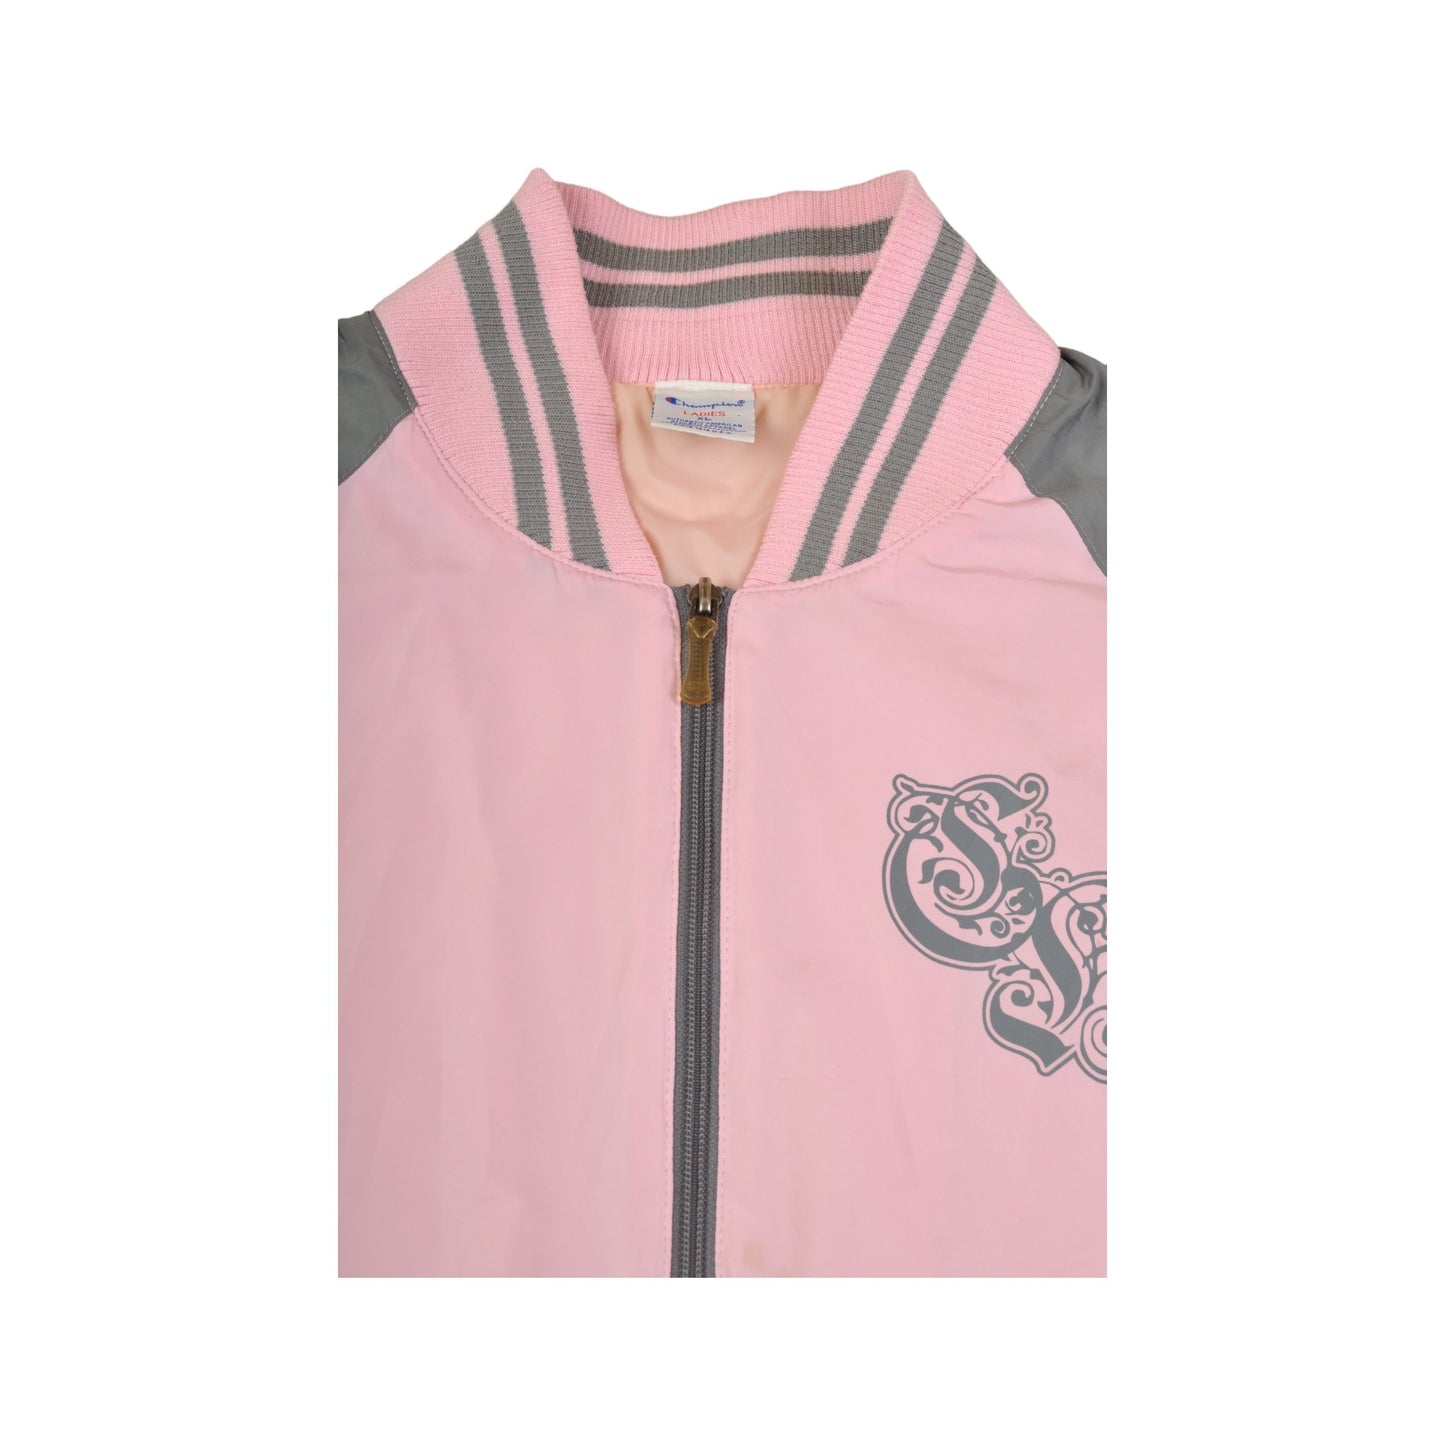 Vintage Champion Windbreaker Varsity Jacket Pink/Grey Ladies XL